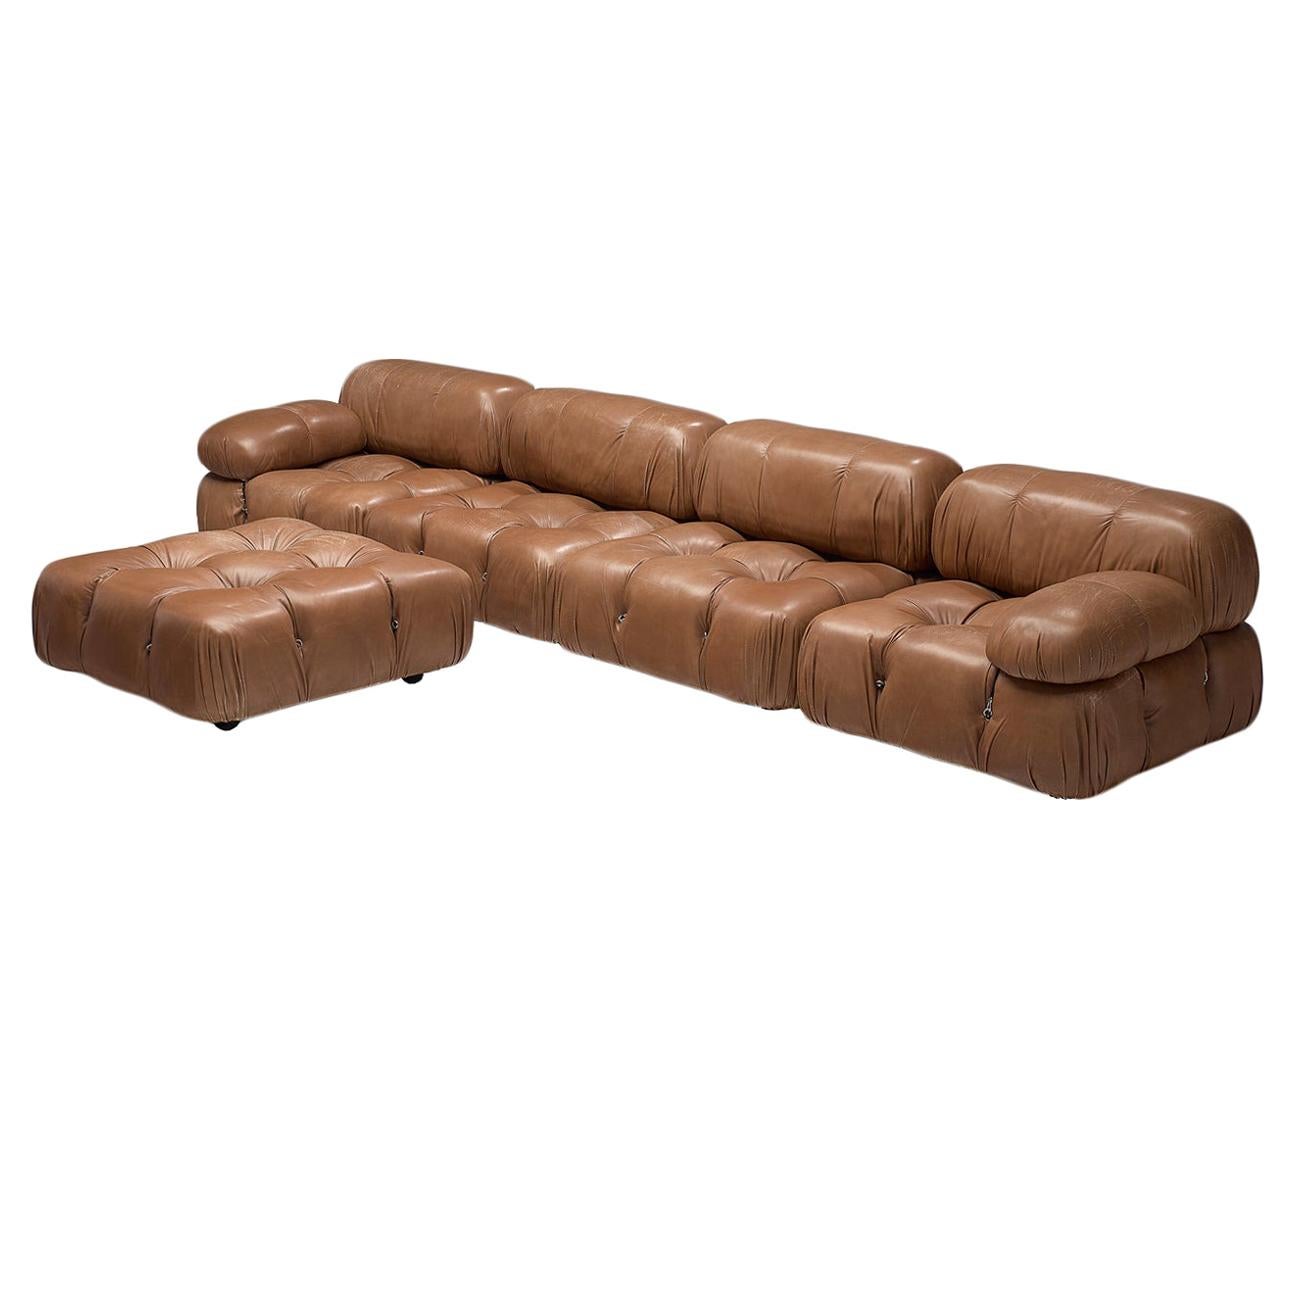 Mario Bellini 'Camaleonda' Modular Sofa in Original Brown Leather